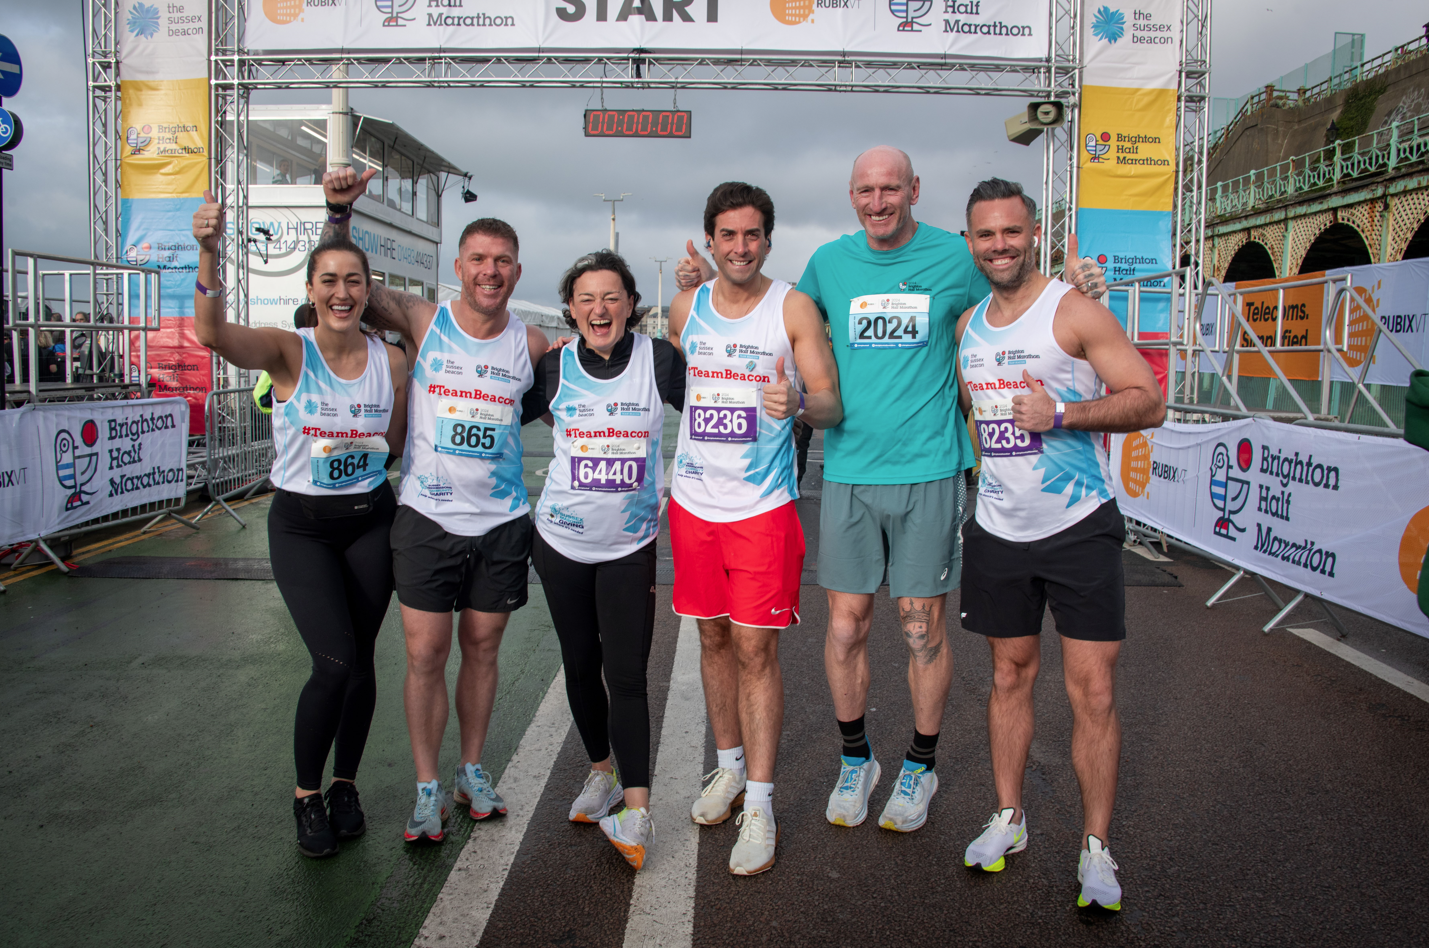 Team Beacon smashes Brighton Half Marathon, raising in excess of £70,000 for Brighton-based HIV charity, the Sussex Beacon